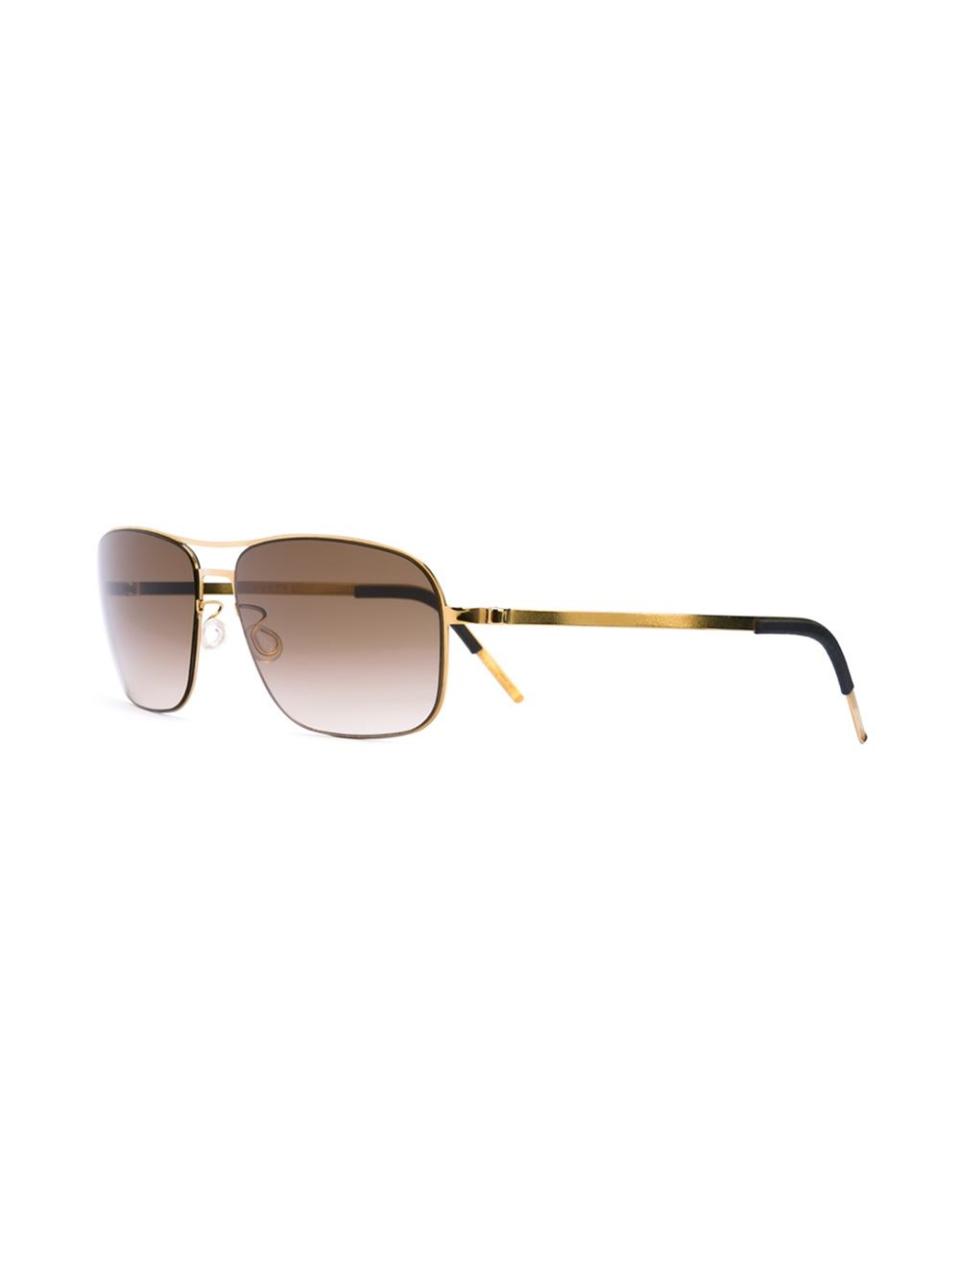 Lindberg rectangular frame sunglasses